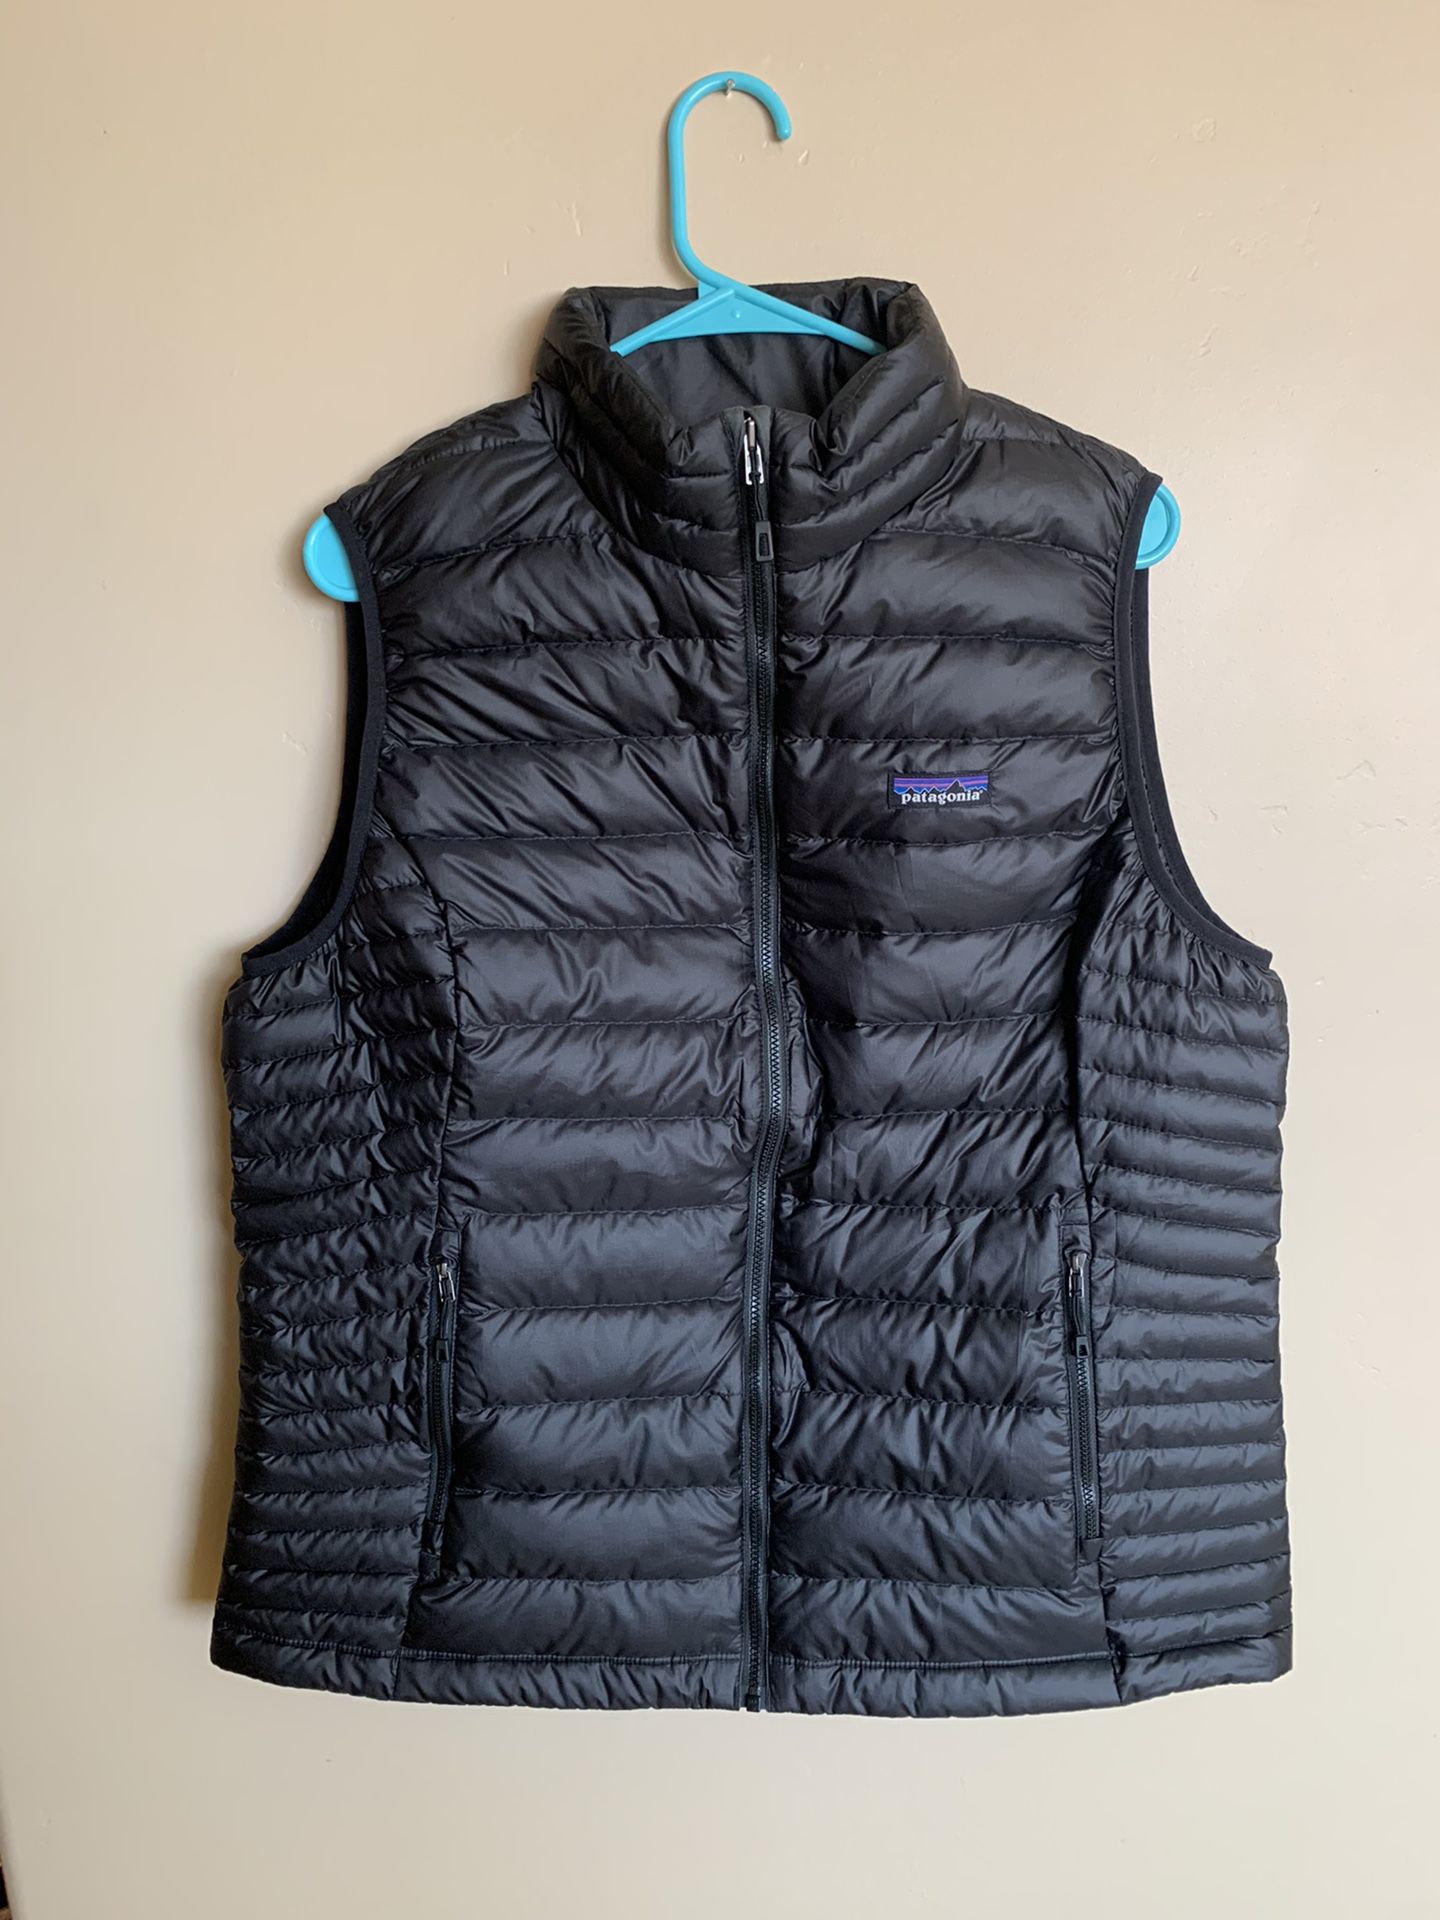 Brand New Women’s Patagonia Vest